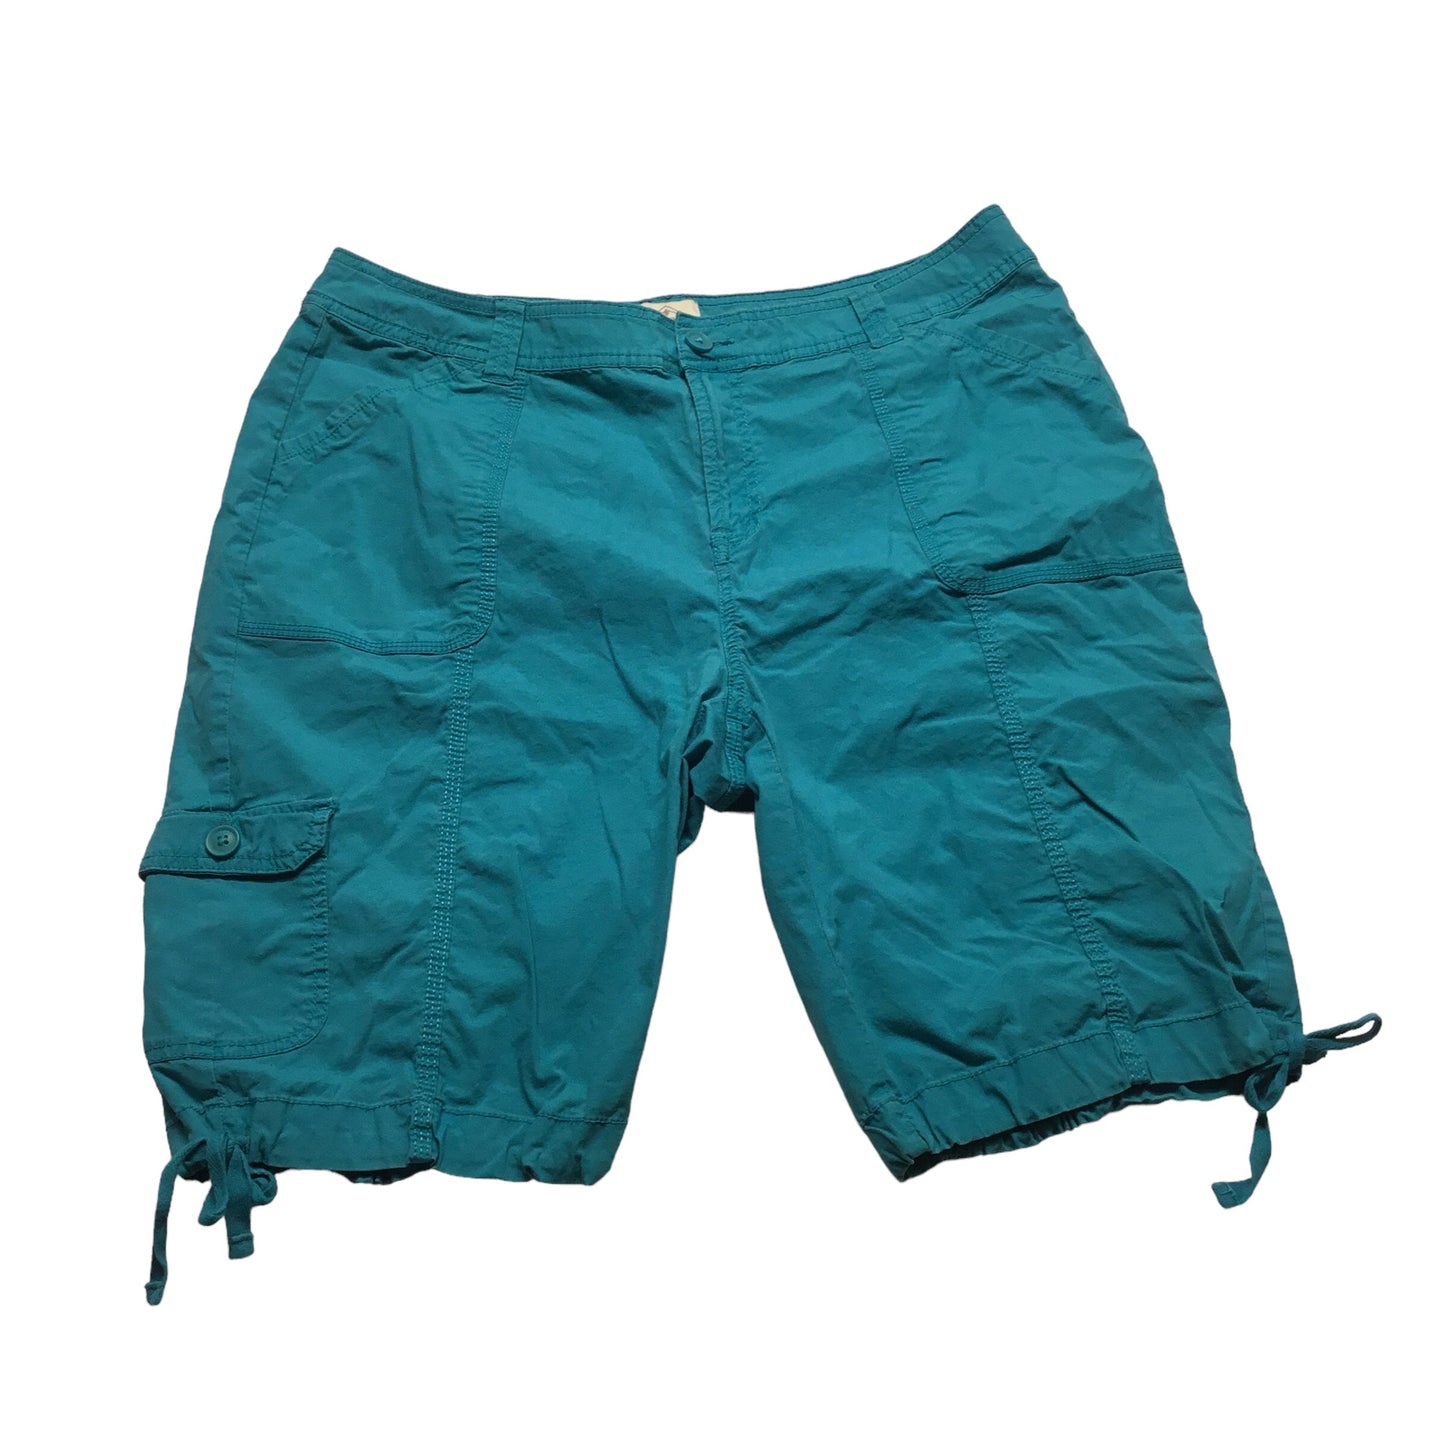 Blue Shorts St Johns Bay, Size 18w